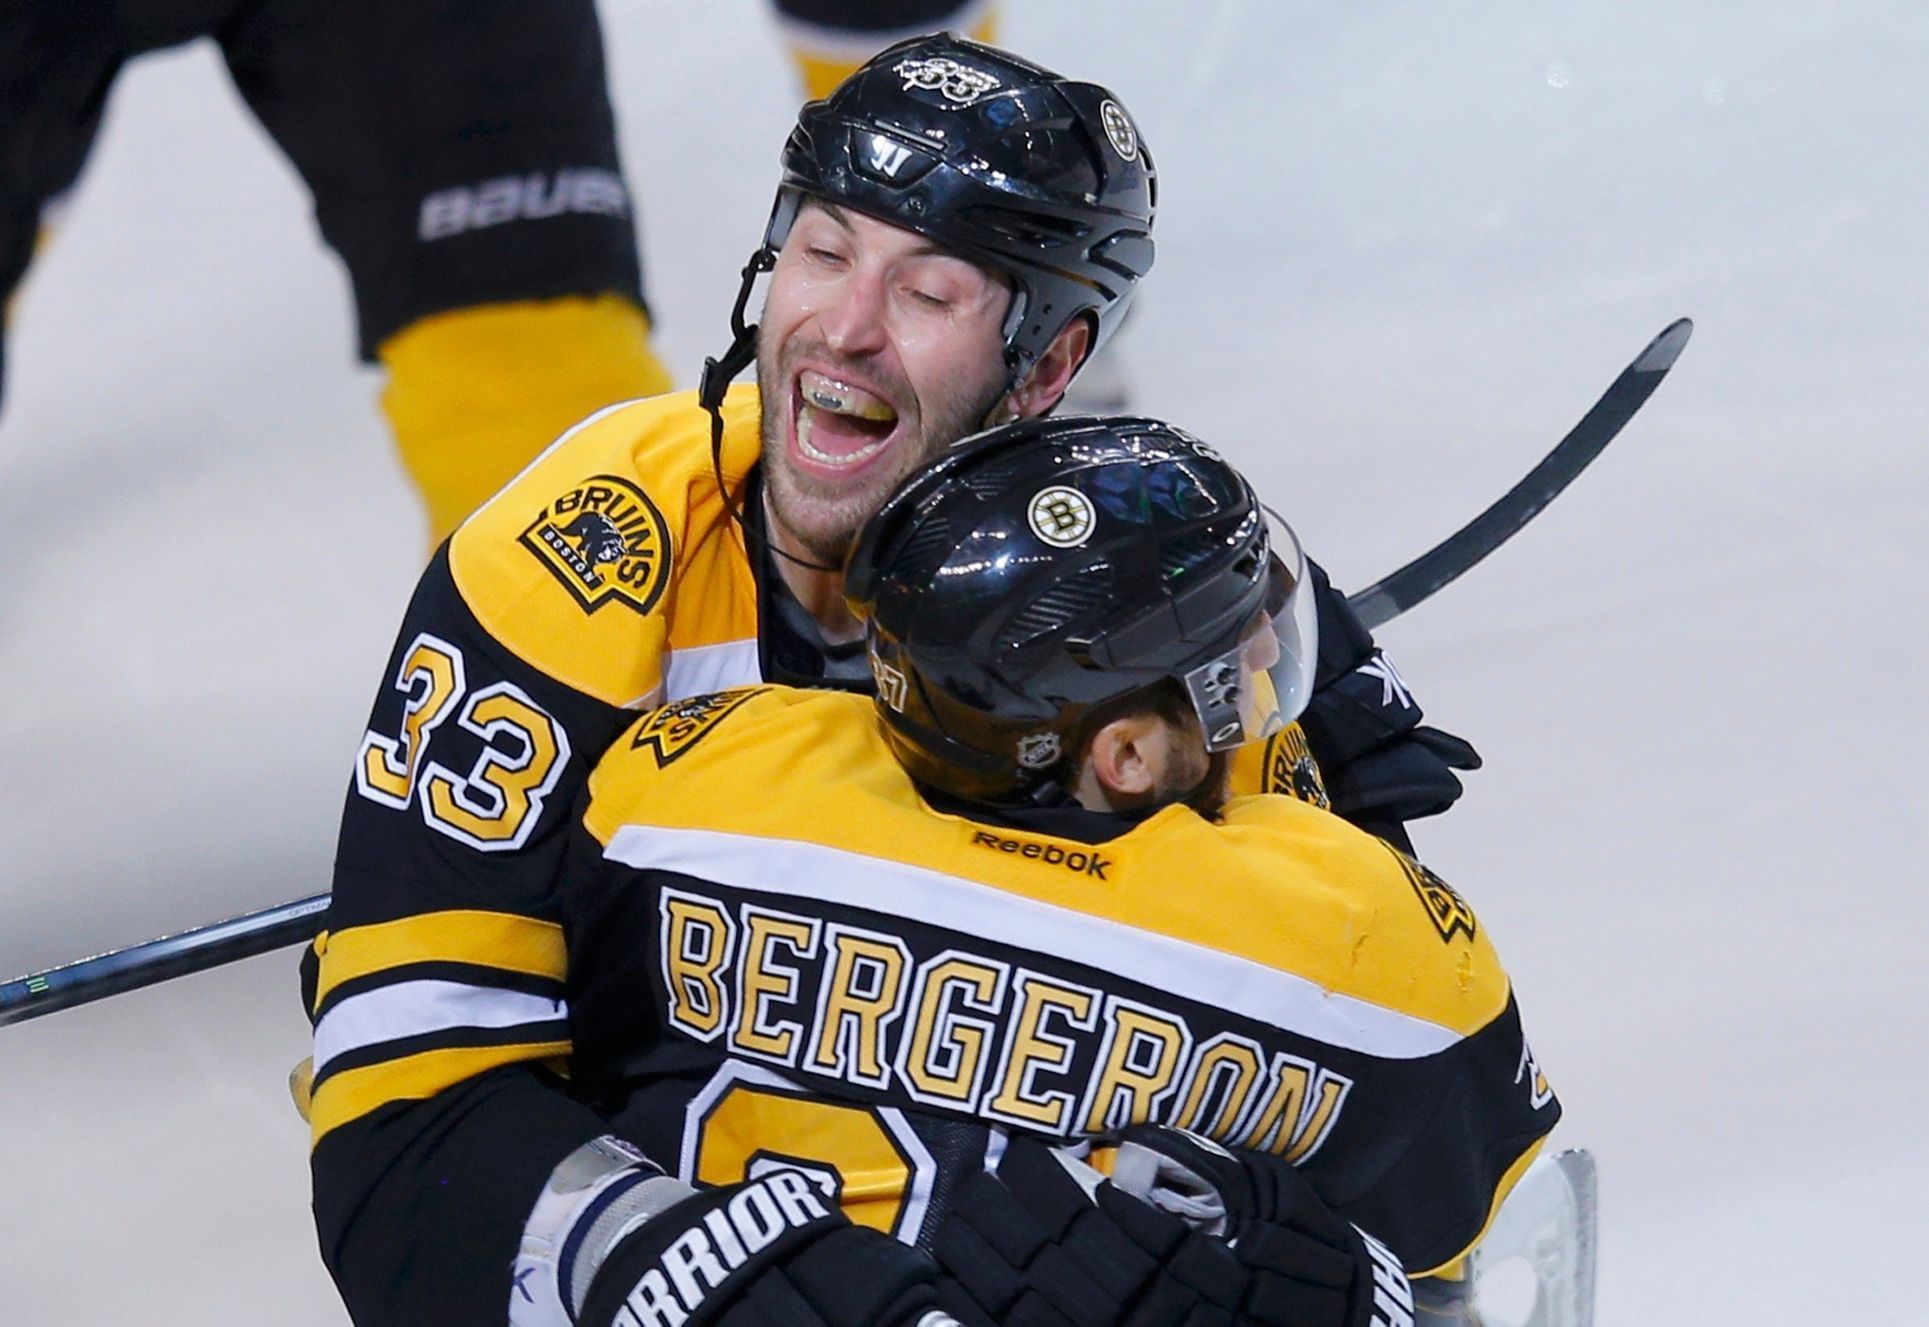 Bruins' Bergeron celebrates with teammate Chara after scorin